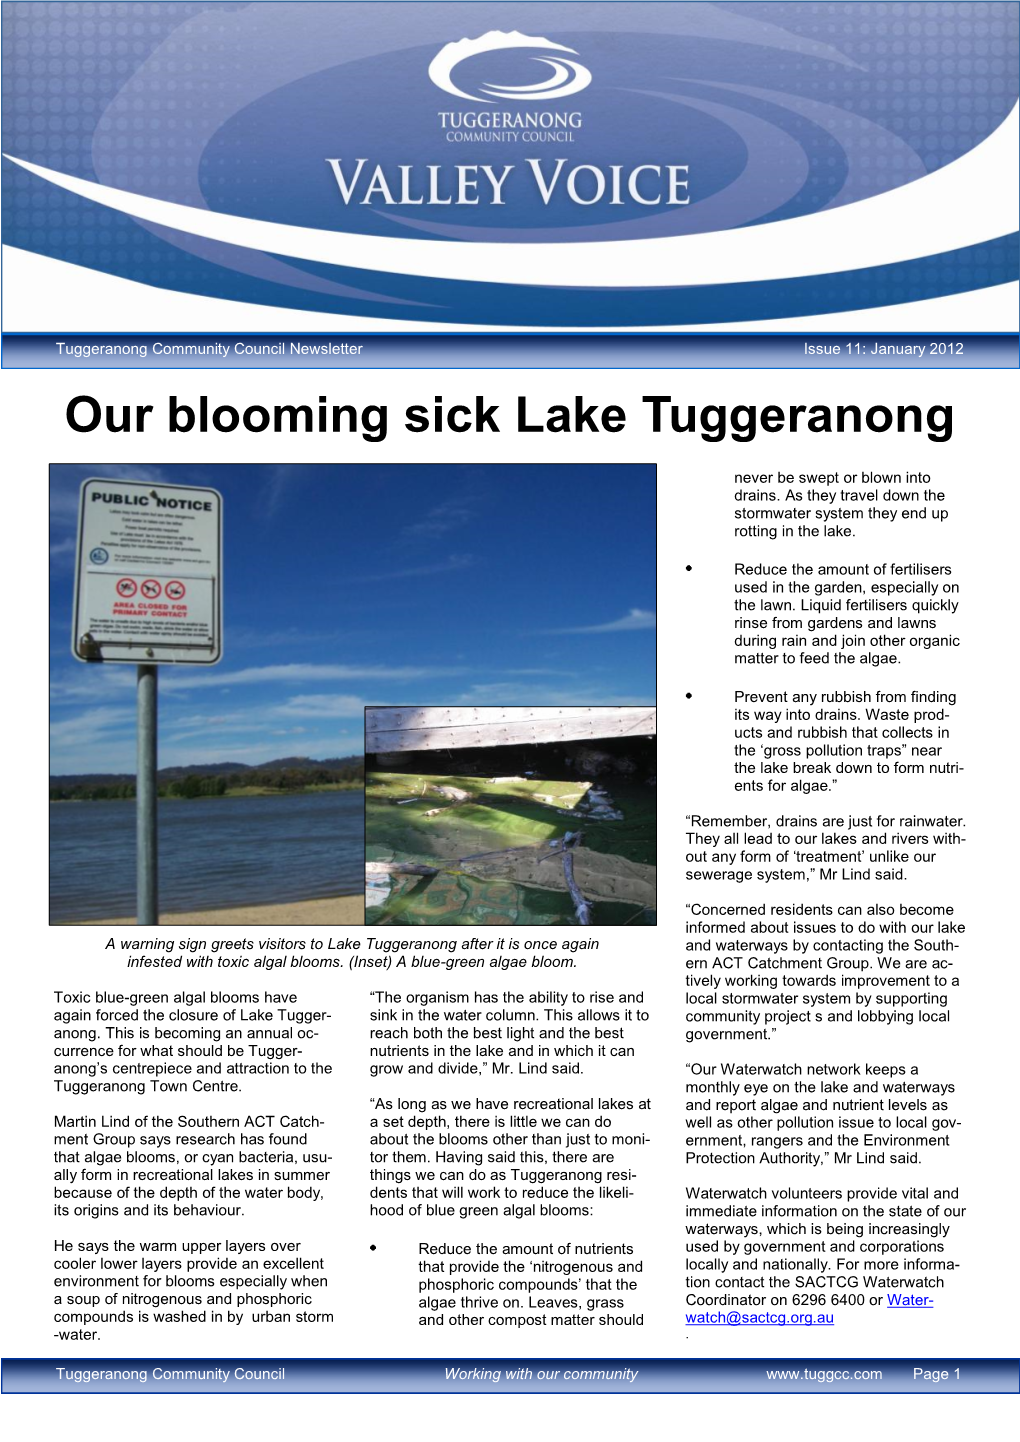 Our Blooming Sick Lake Tuggeranong